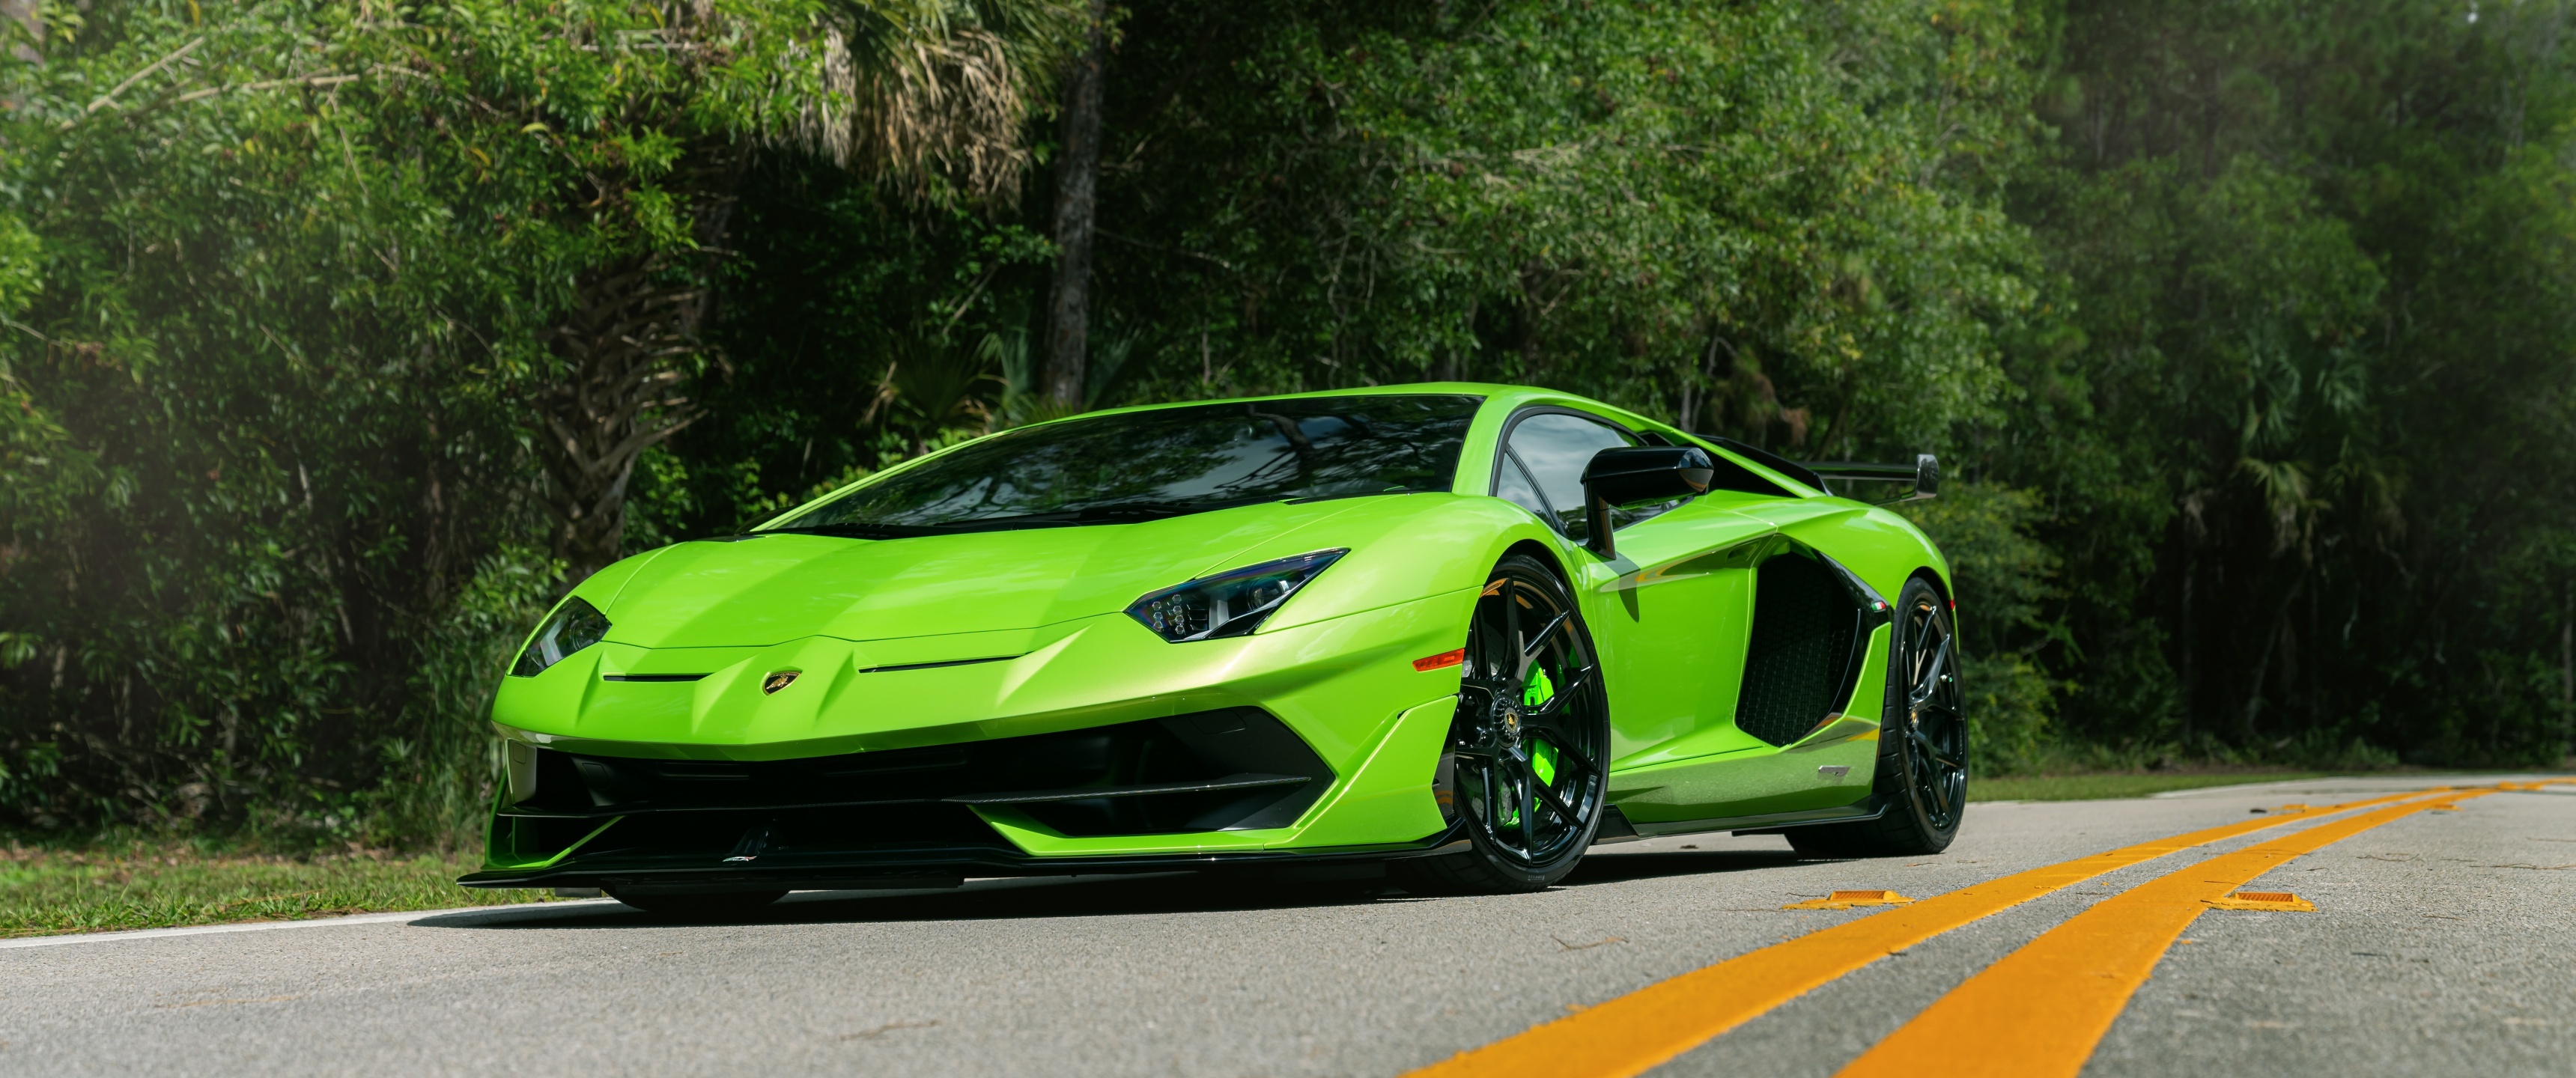 Lamborghini Aventador SVJ, 4K wallpaper, Sports cars, Powerful performance, 3440x1440 Dual Screen Desktop